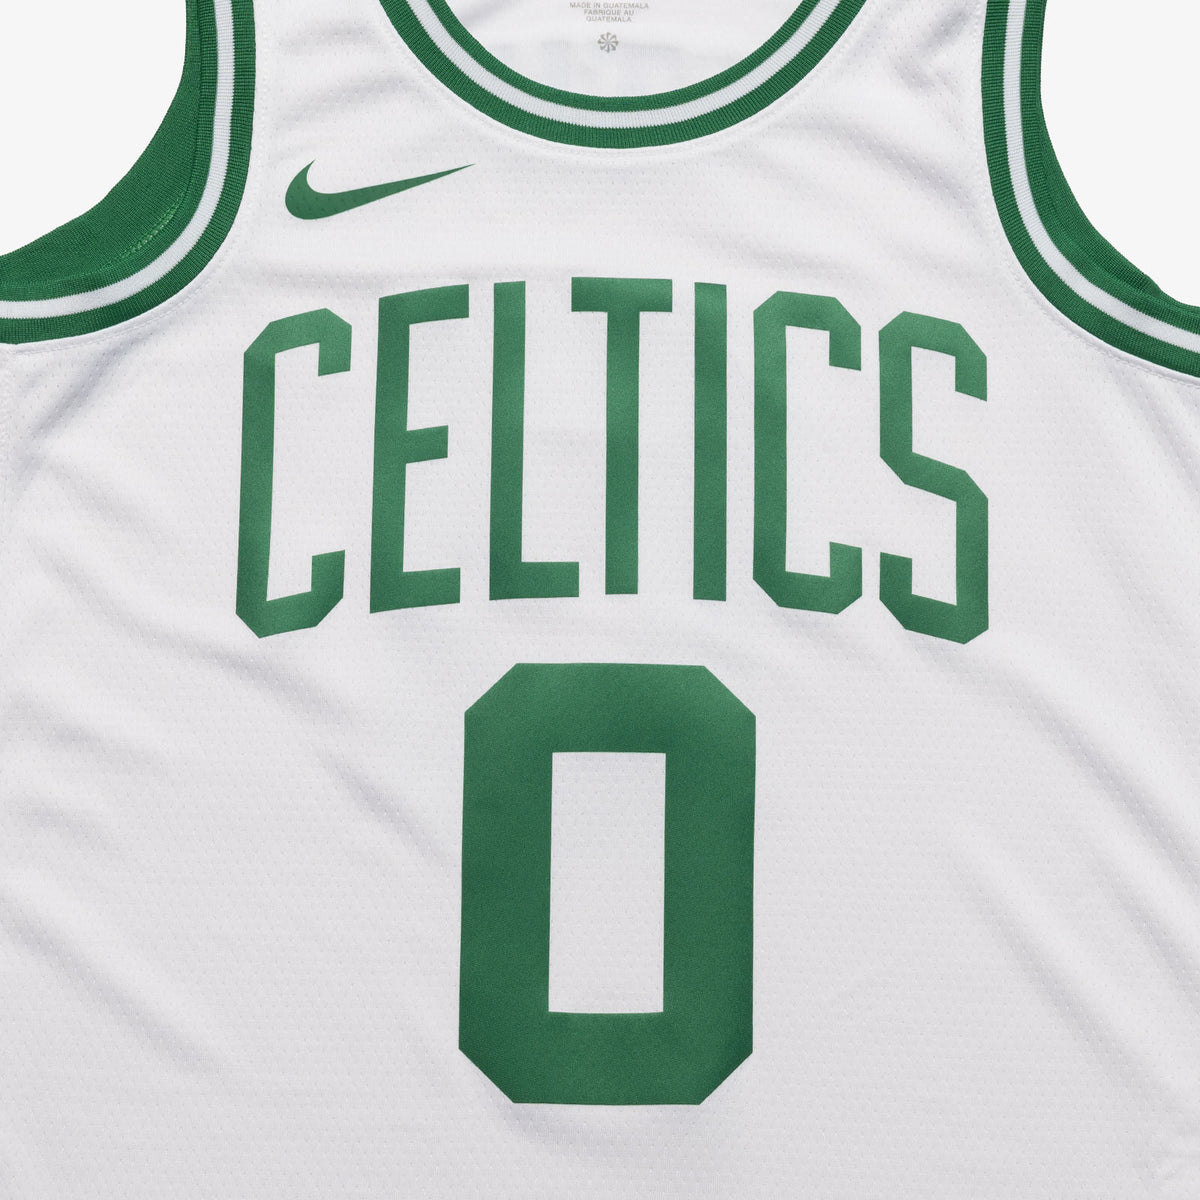 Nike Men's Jayson Tatum Boston Celtics Association Swingman Jersey - White